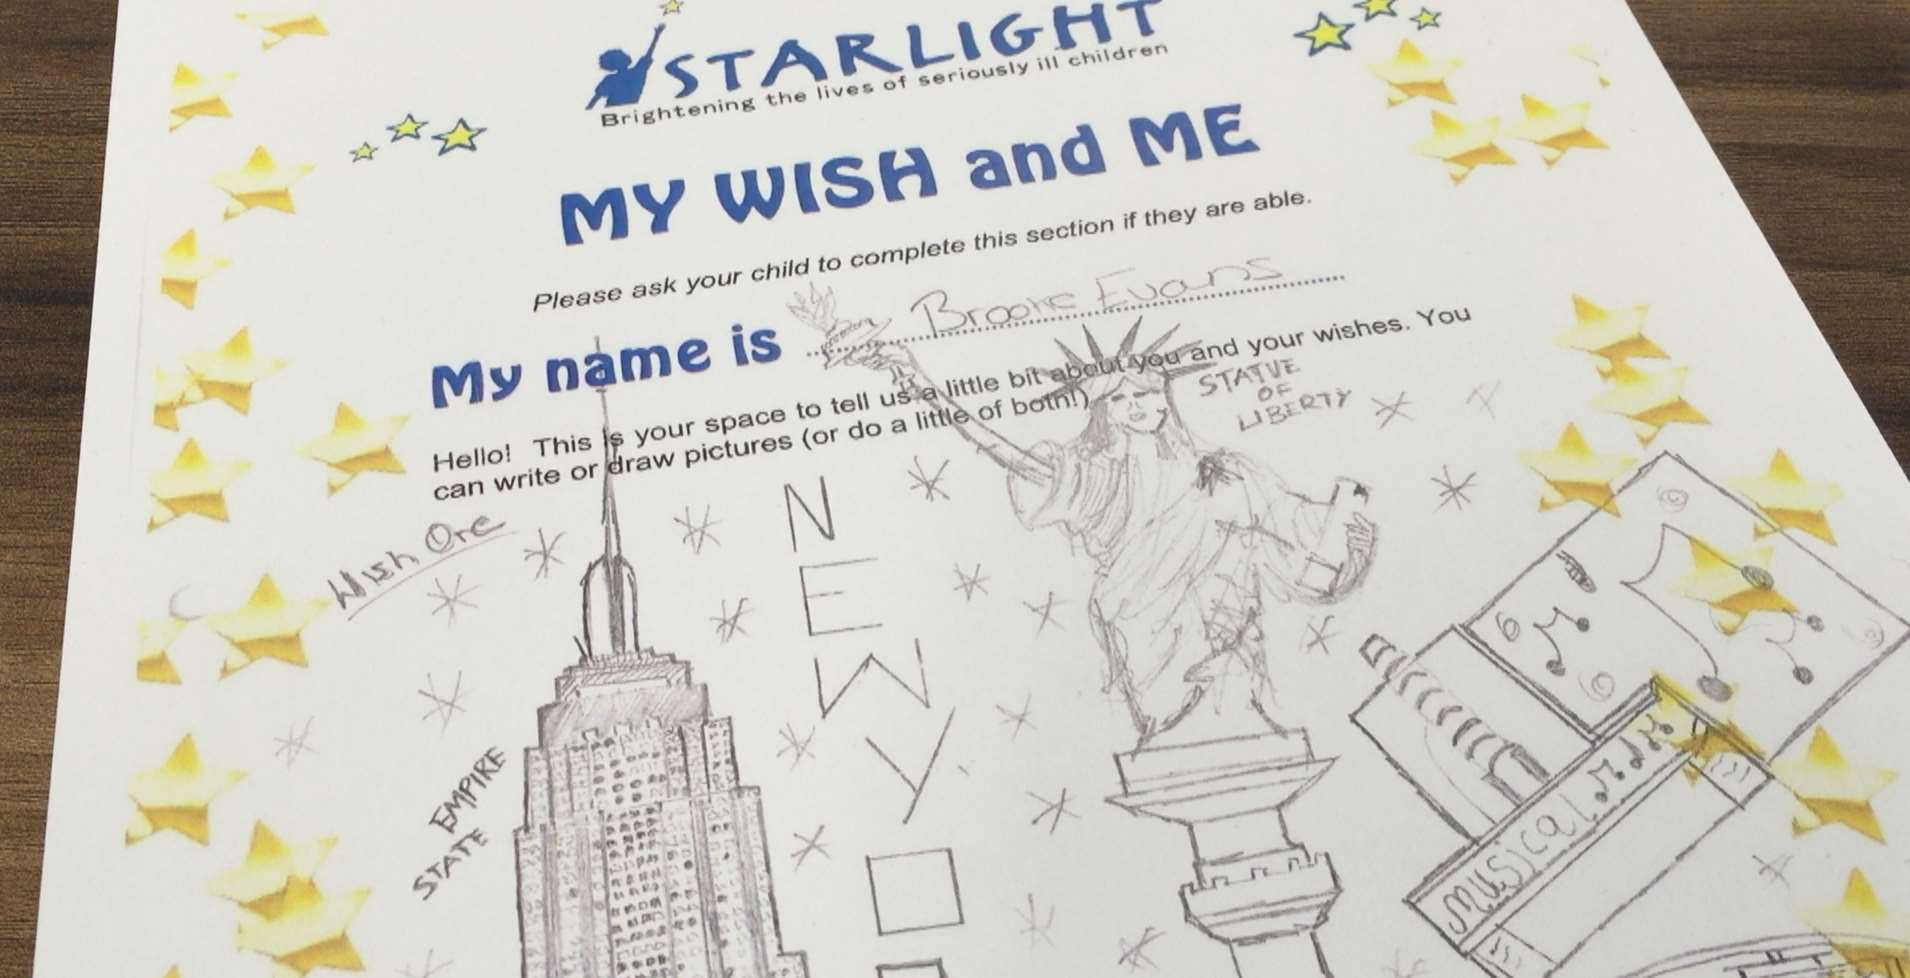 A Starlight wish certificate